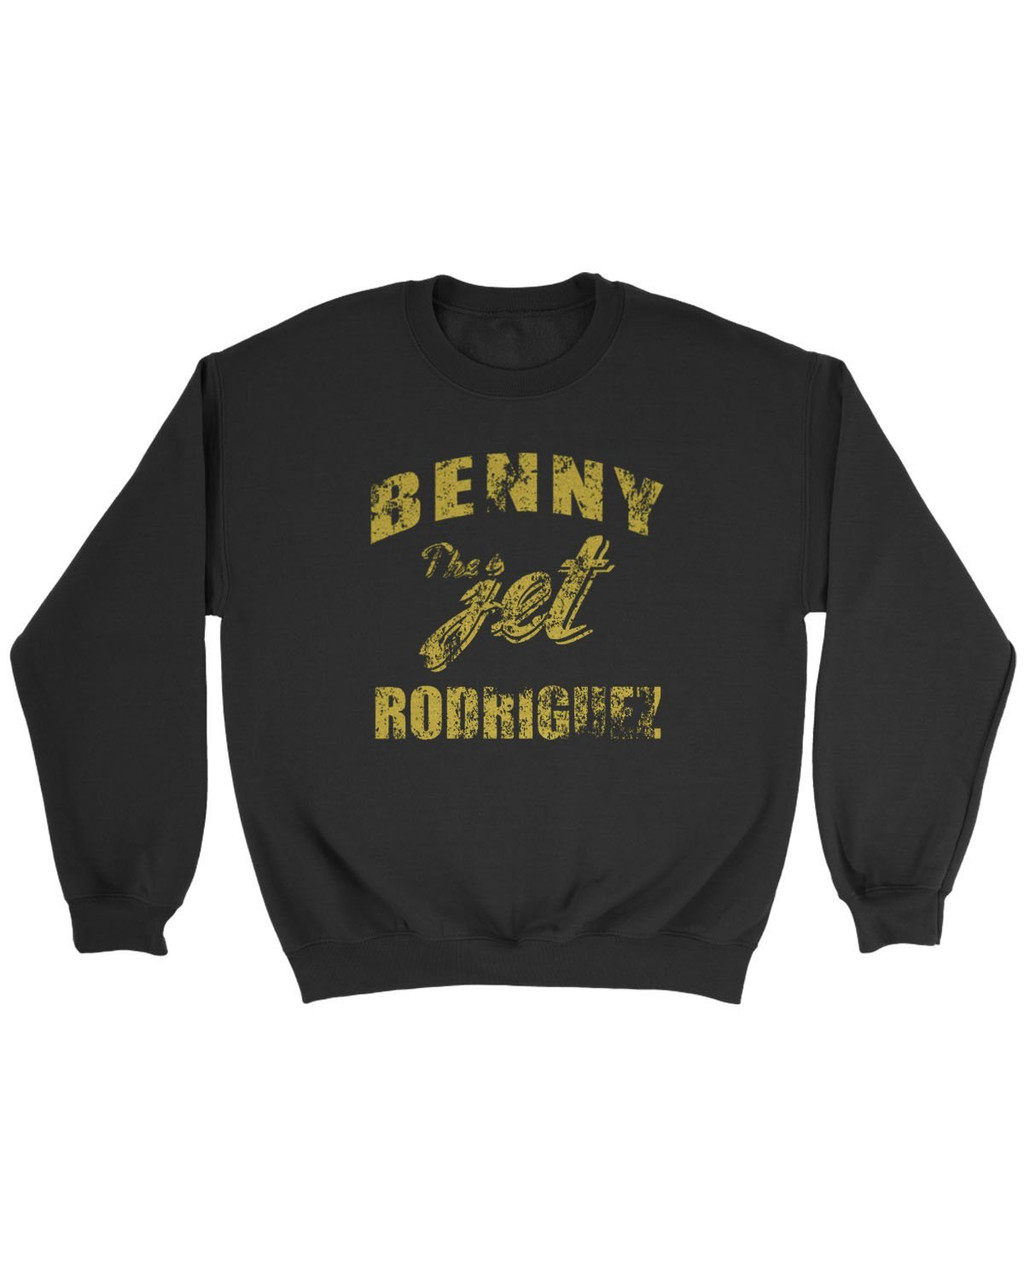 130 Benny Rodriguez ideas  benny the jet rodriguez, the sandlot